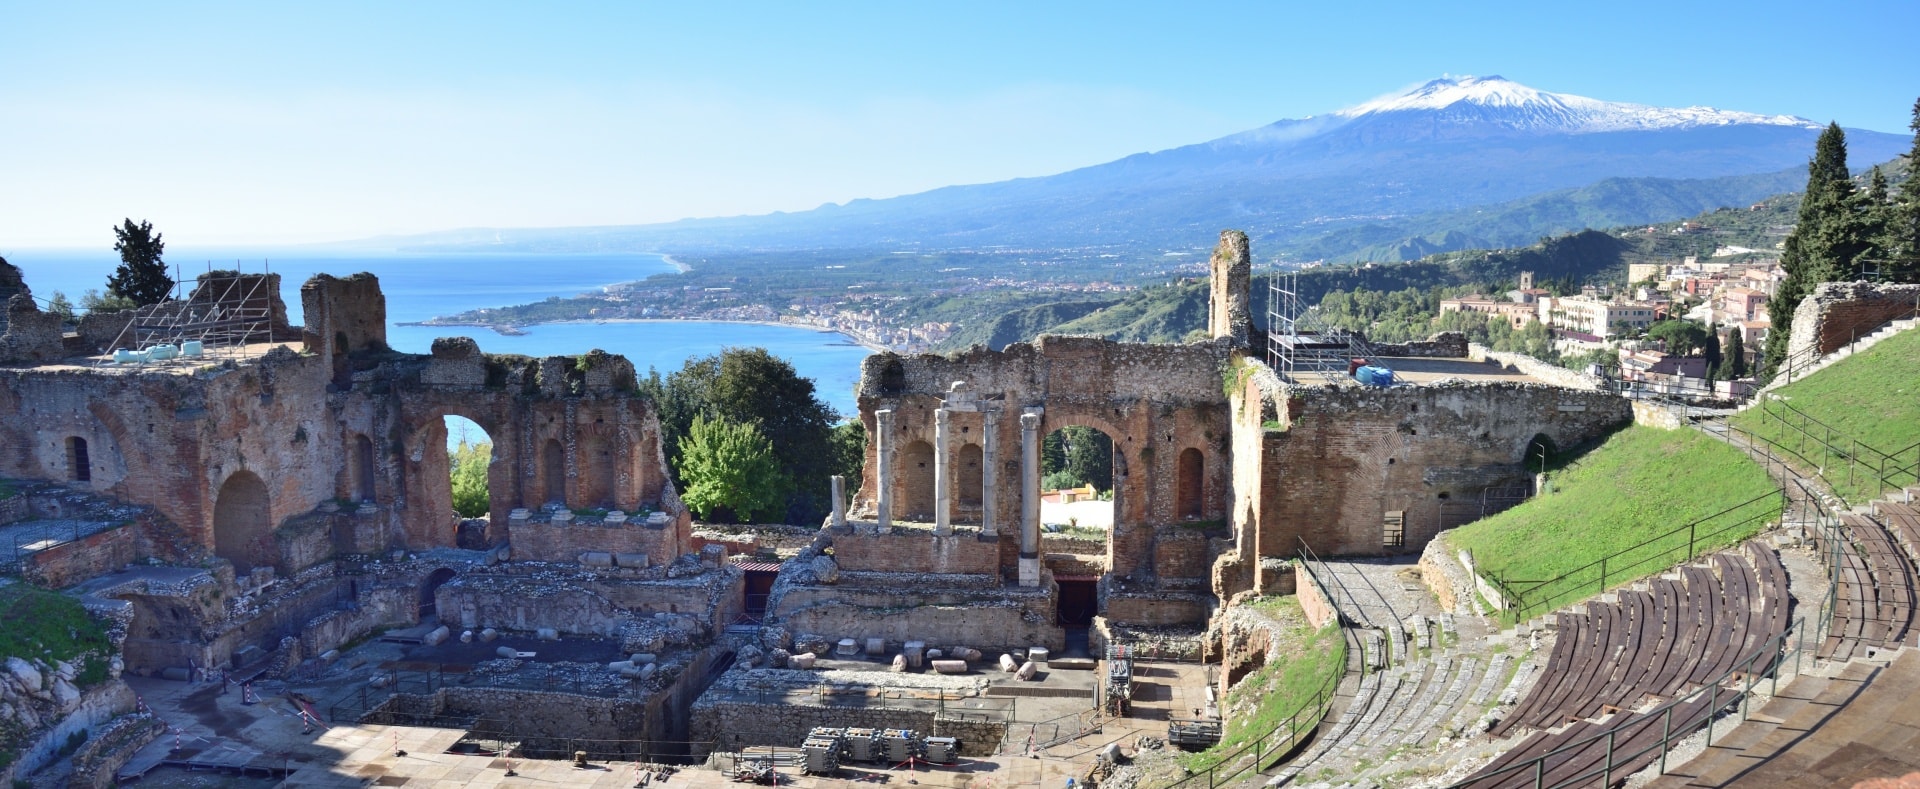 Itinerario per un week end: da Catania a Taormina